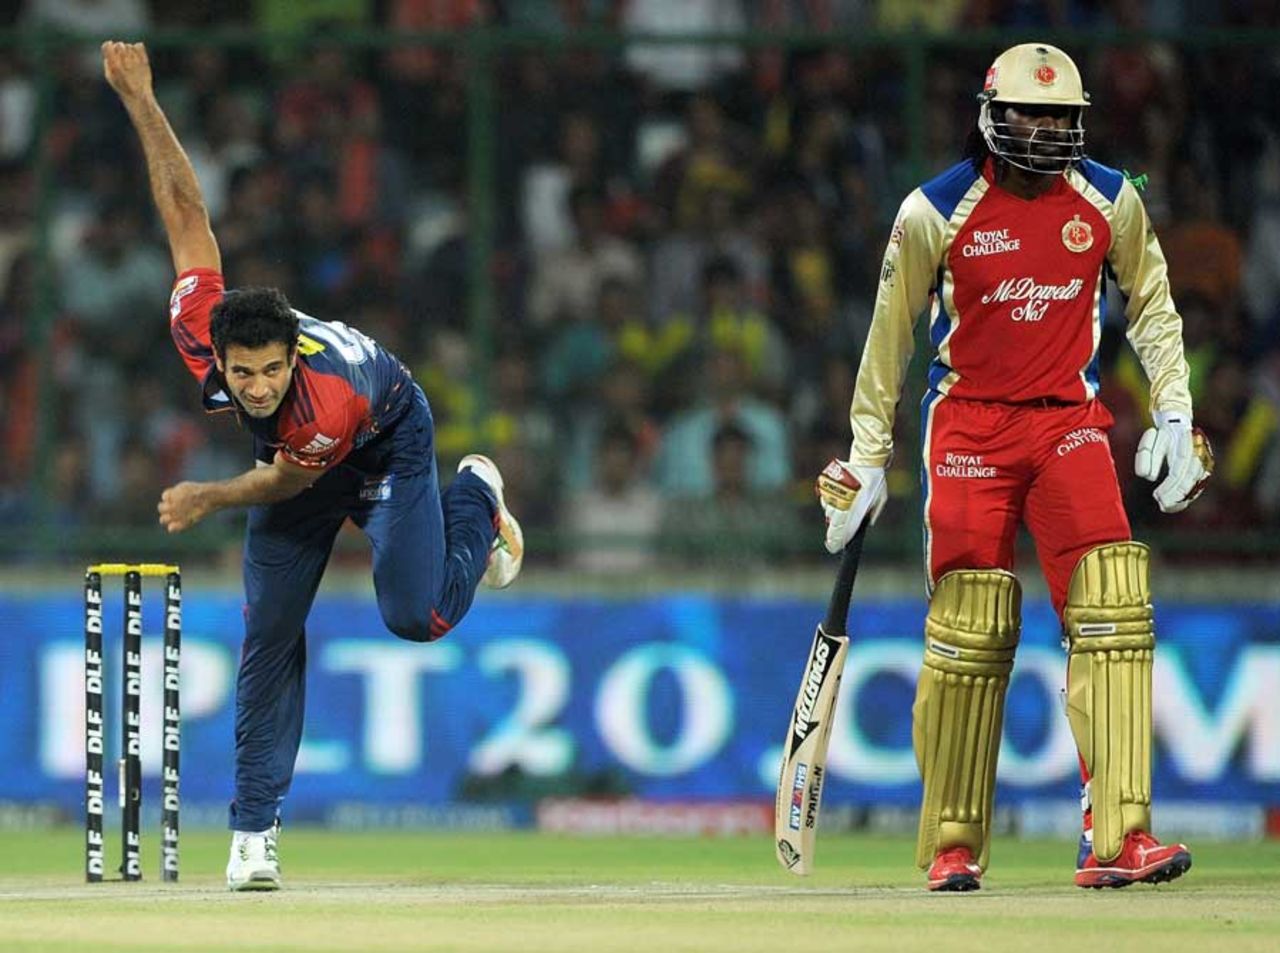 Irfan Pathan sends one down, Delhi Daredevils v Royal Challengers Bangalore, IPL 2012, Delhi